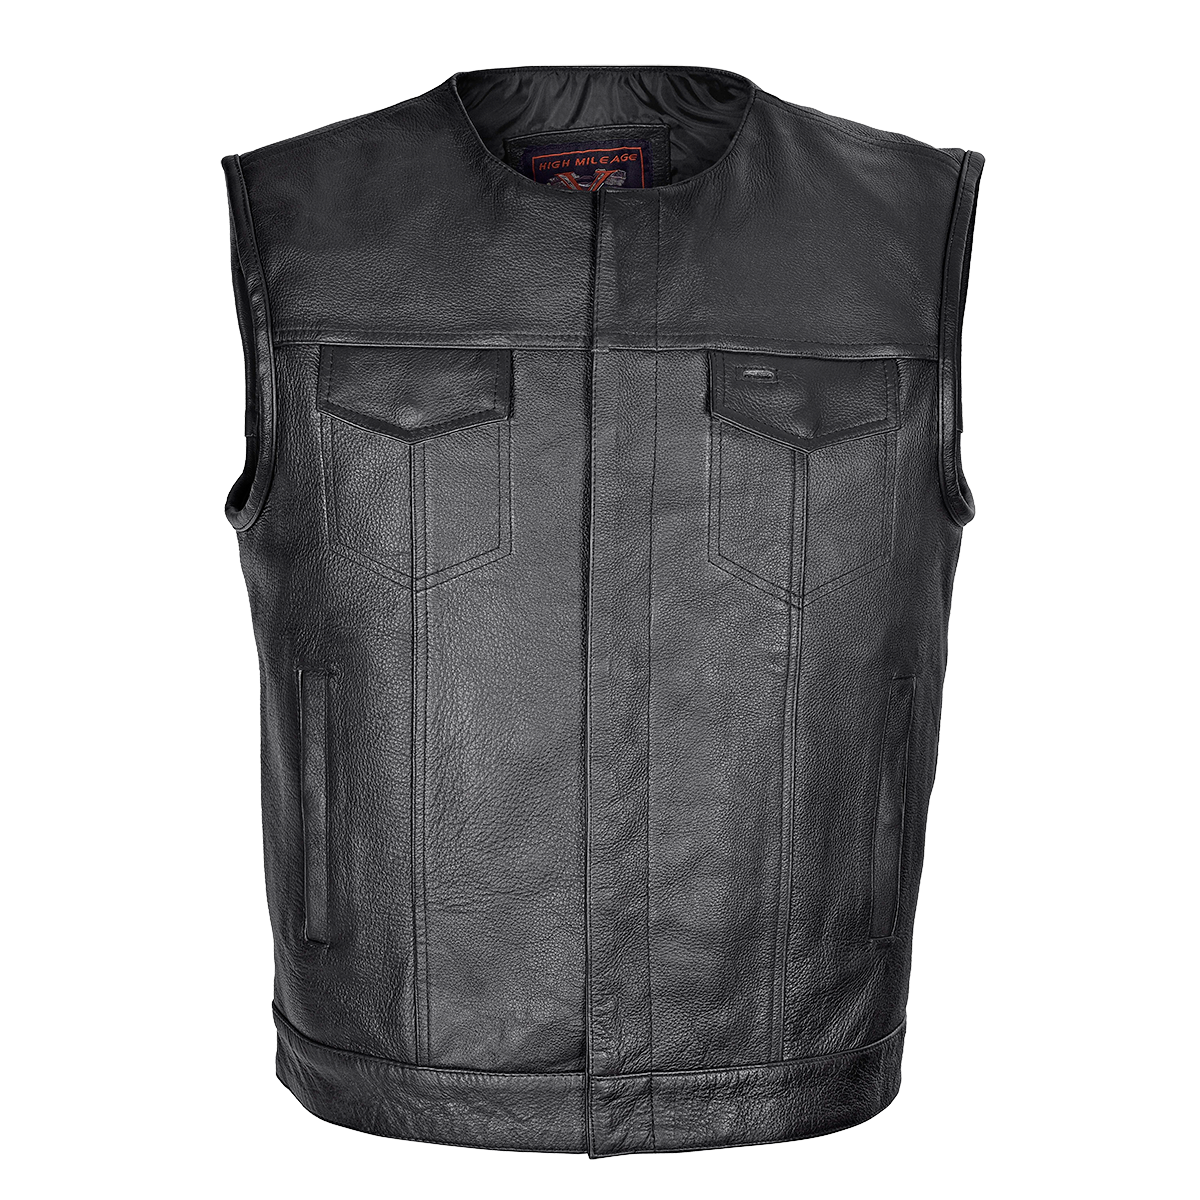 HMM919 Men's Leather Club Vest with Quick Access Gun Pocket